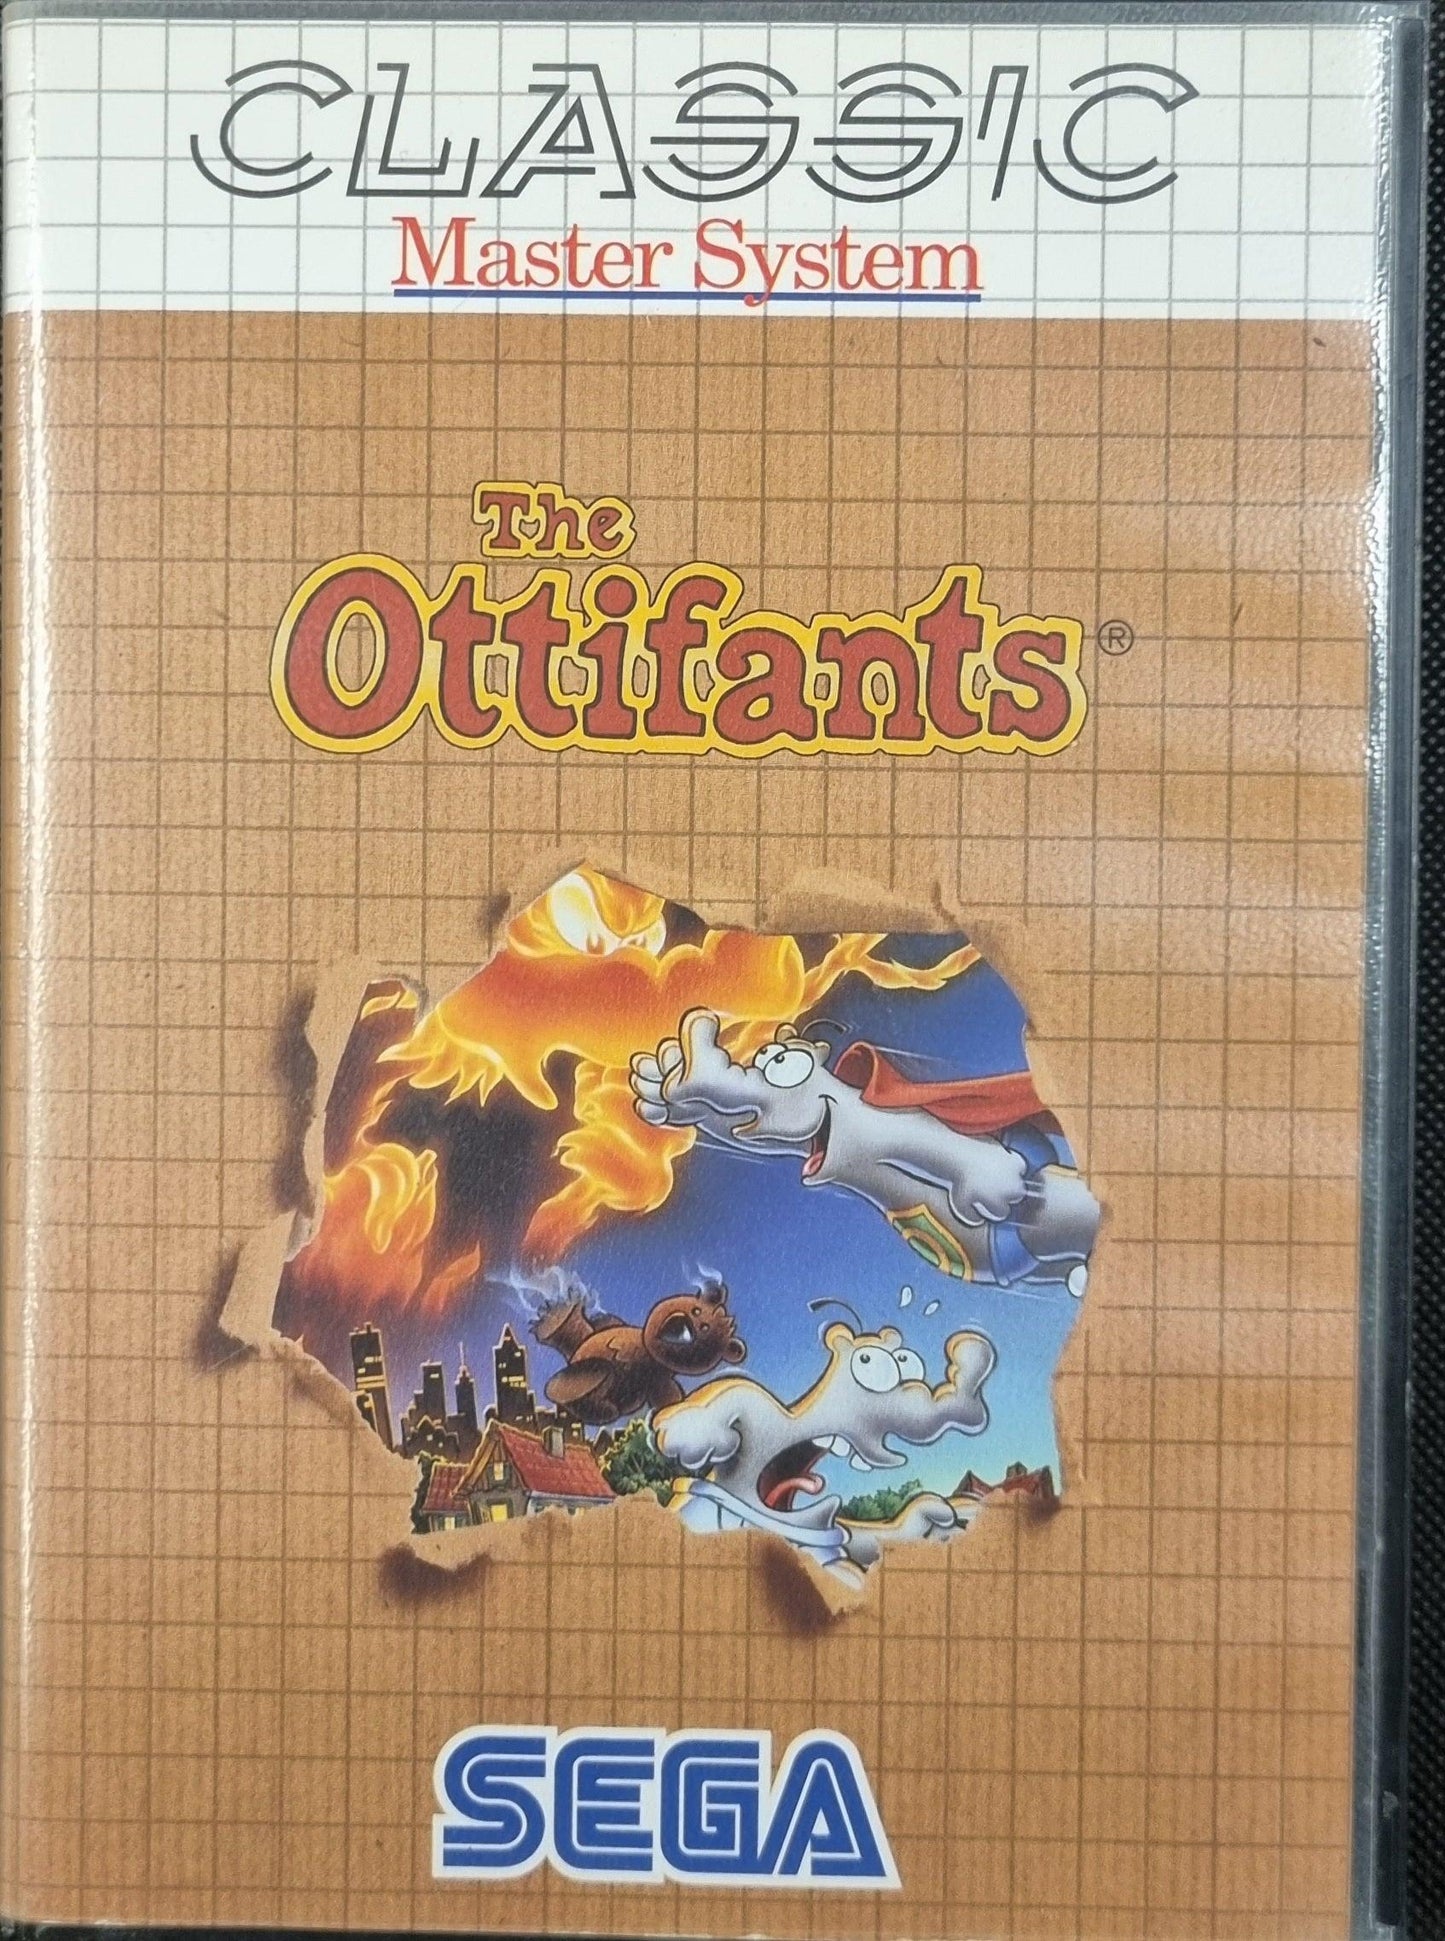 The Ottifants - ZZGames.dk